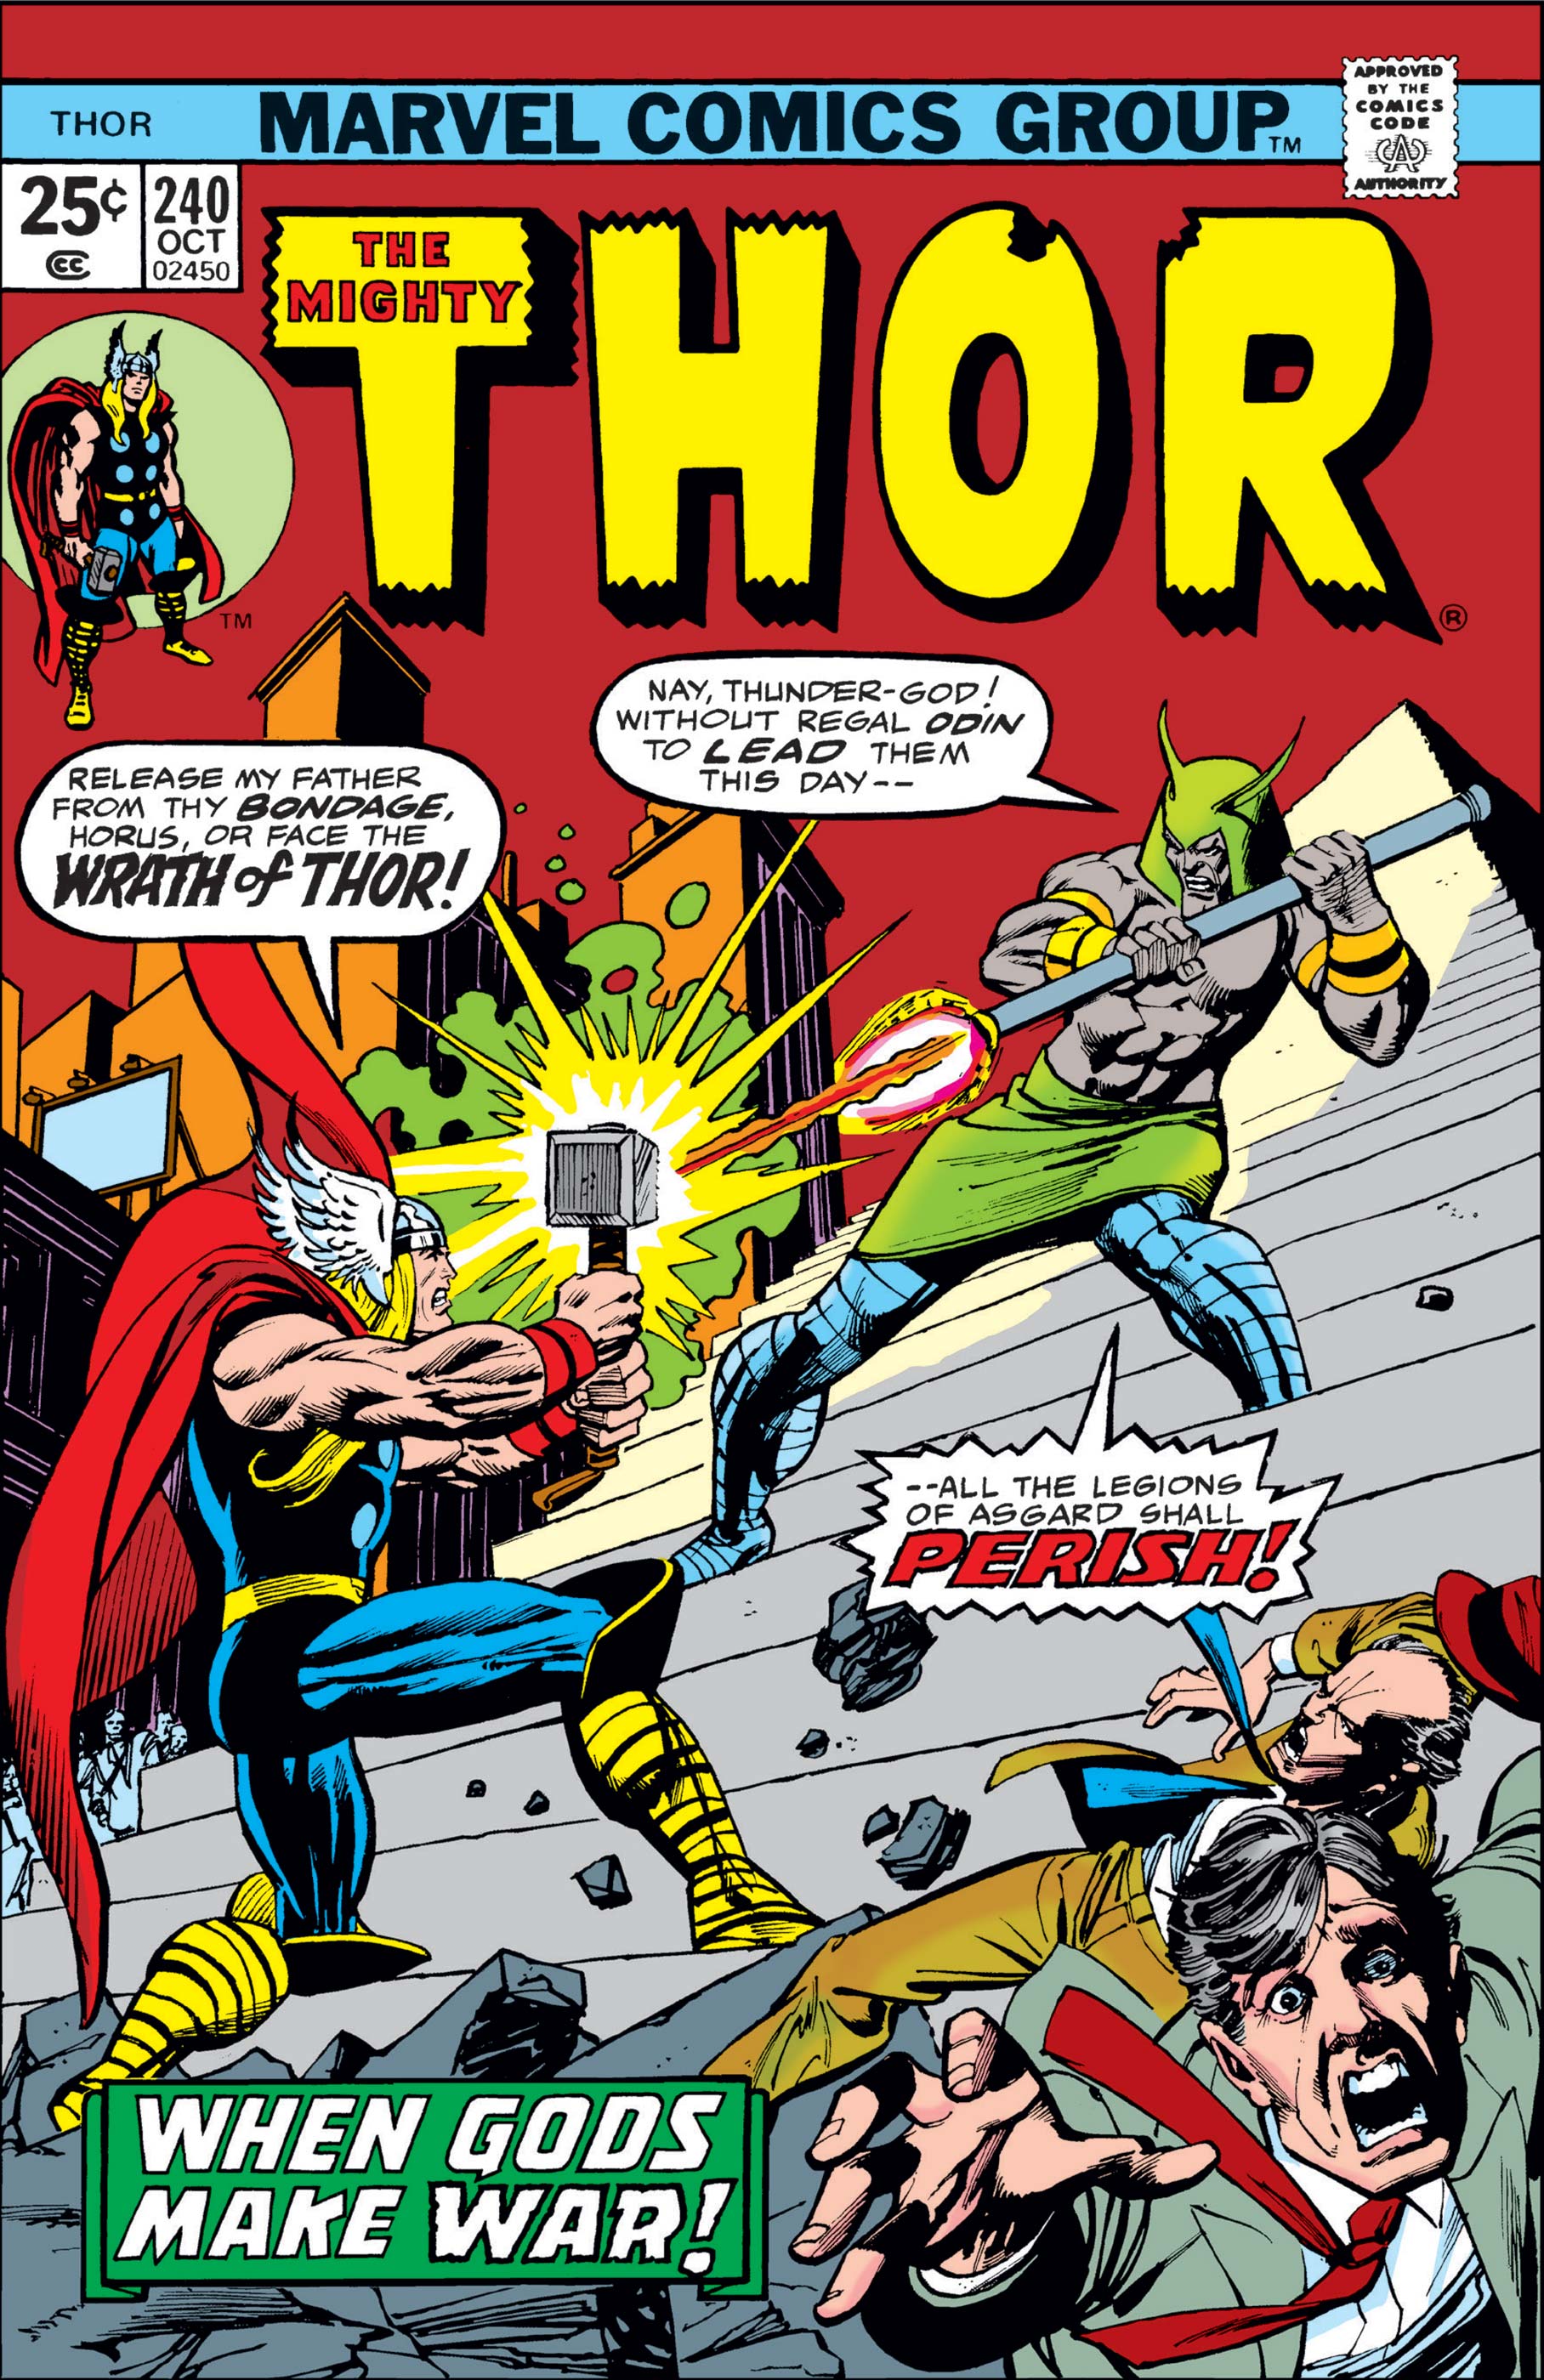 Thor (1966) #240